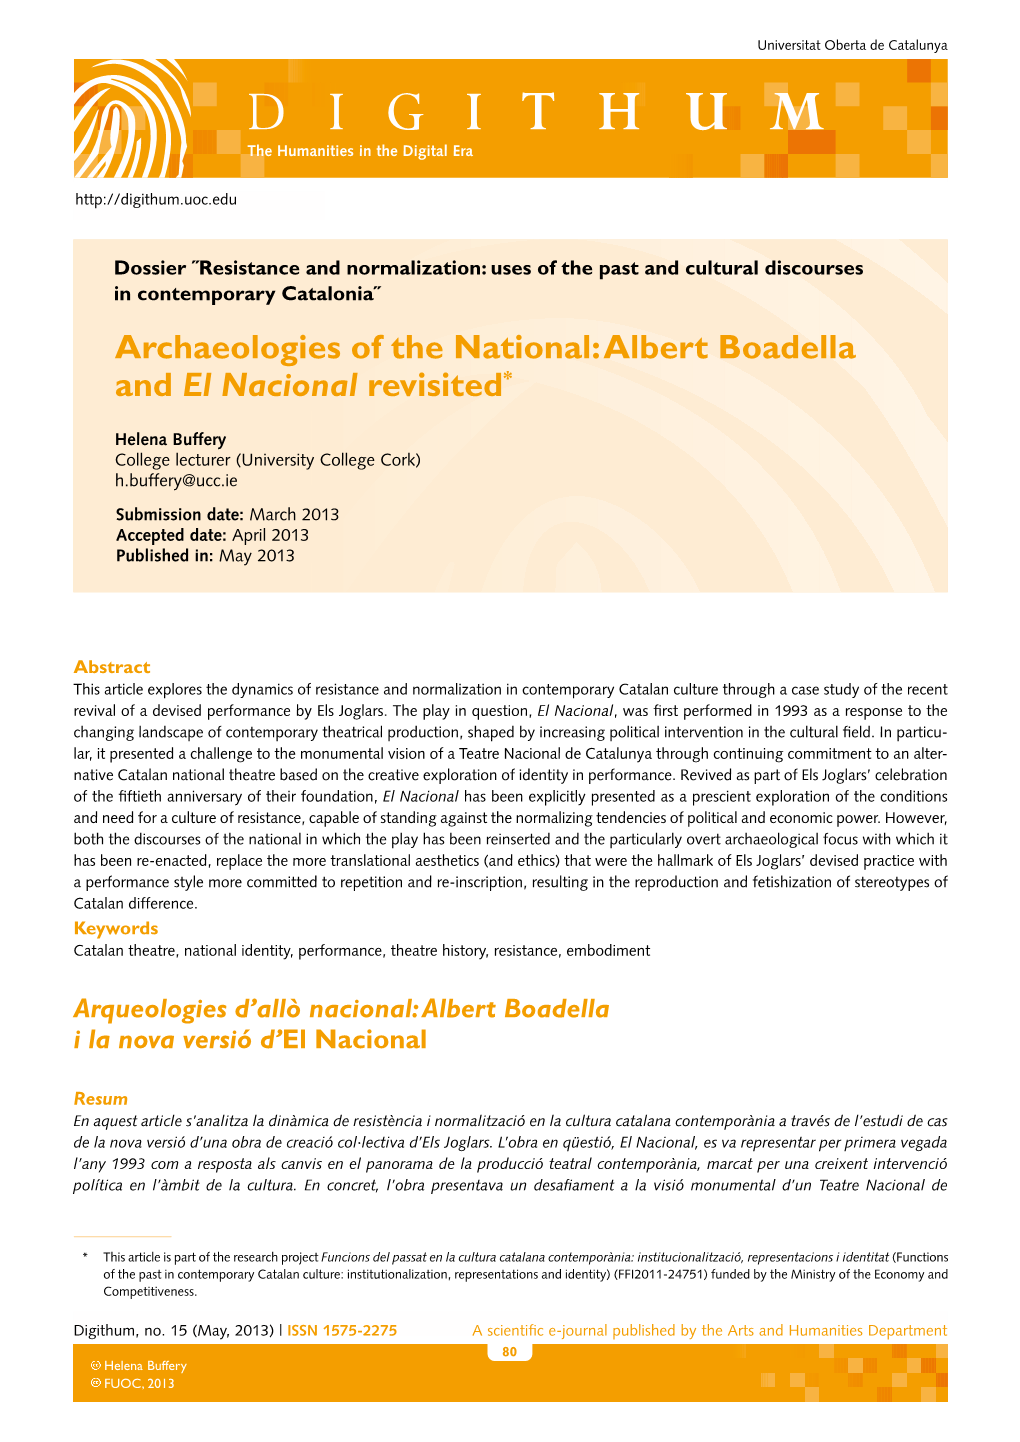 Archaeologies of the National: Albert Boadella and El Nacional Revisited*